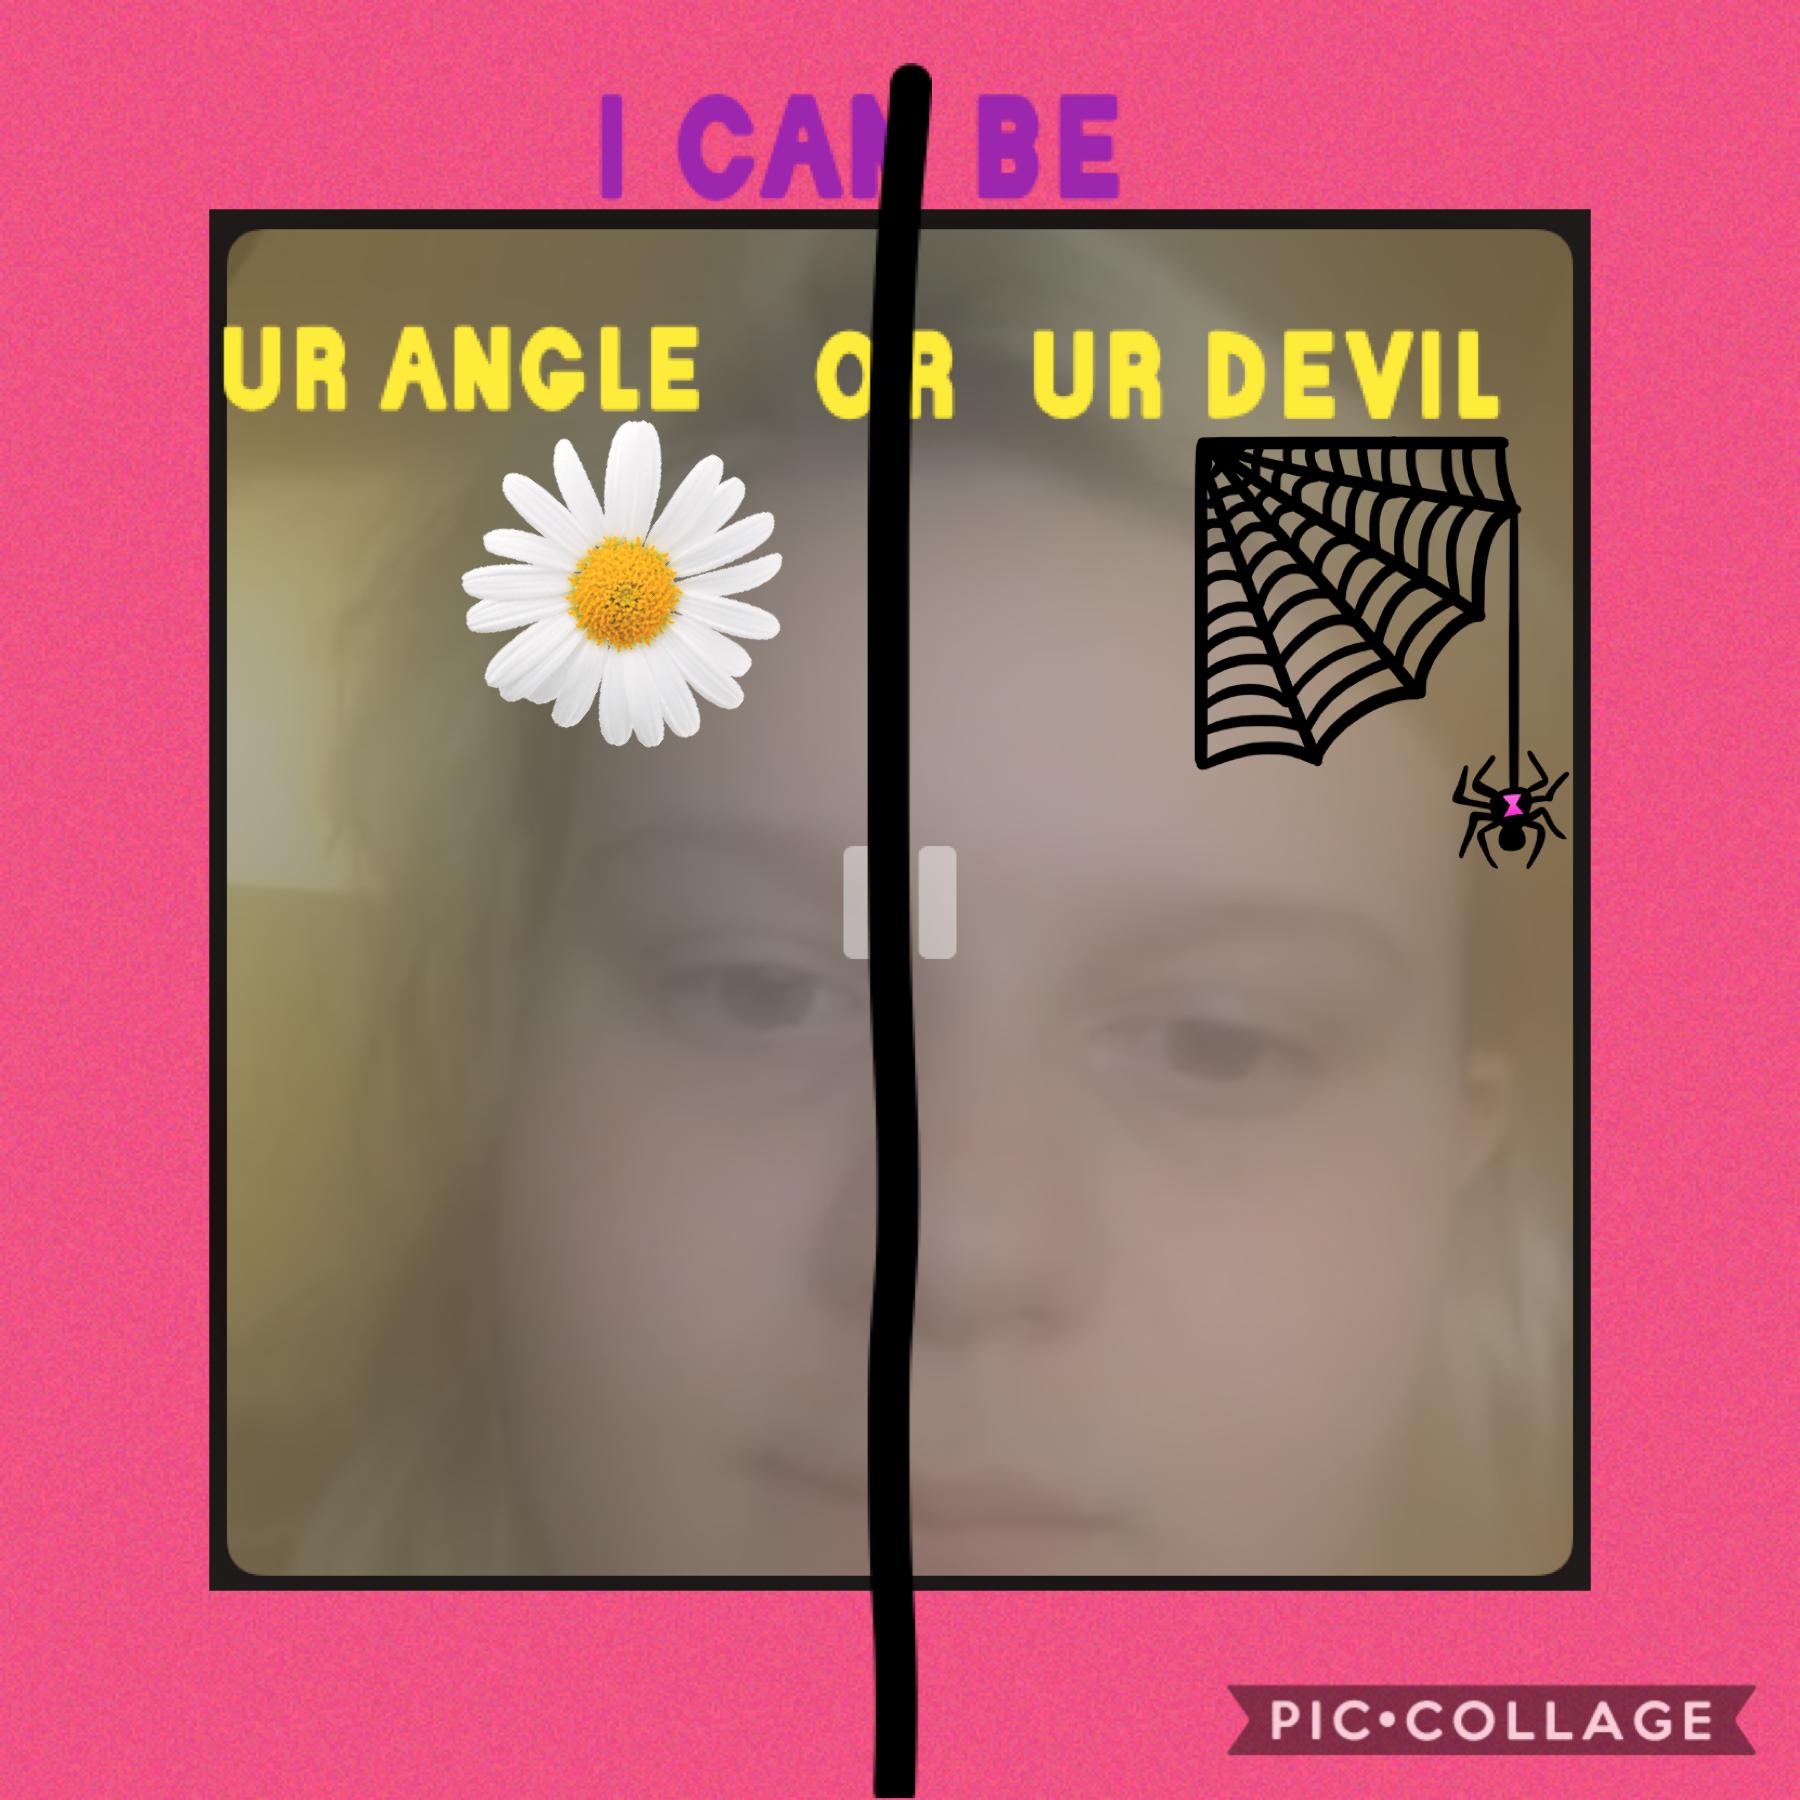 i can be ur angle 🌼 or ur devil 🕷